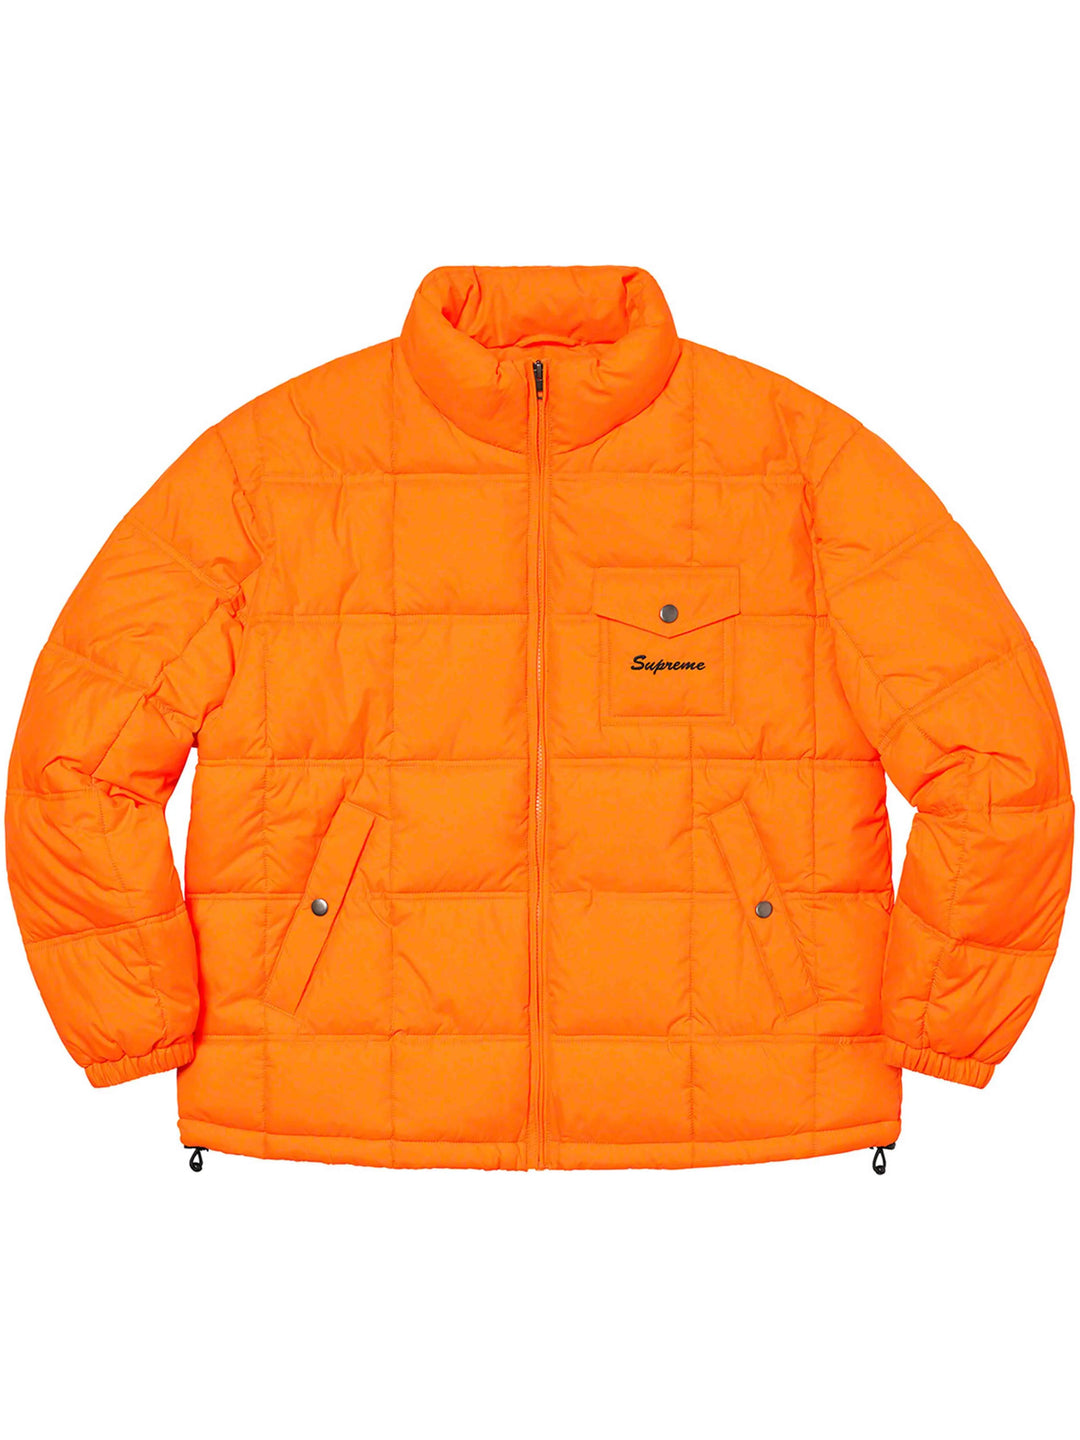 Supreme Iggy Pop Puffer Jacket Orange [SS21] Prior